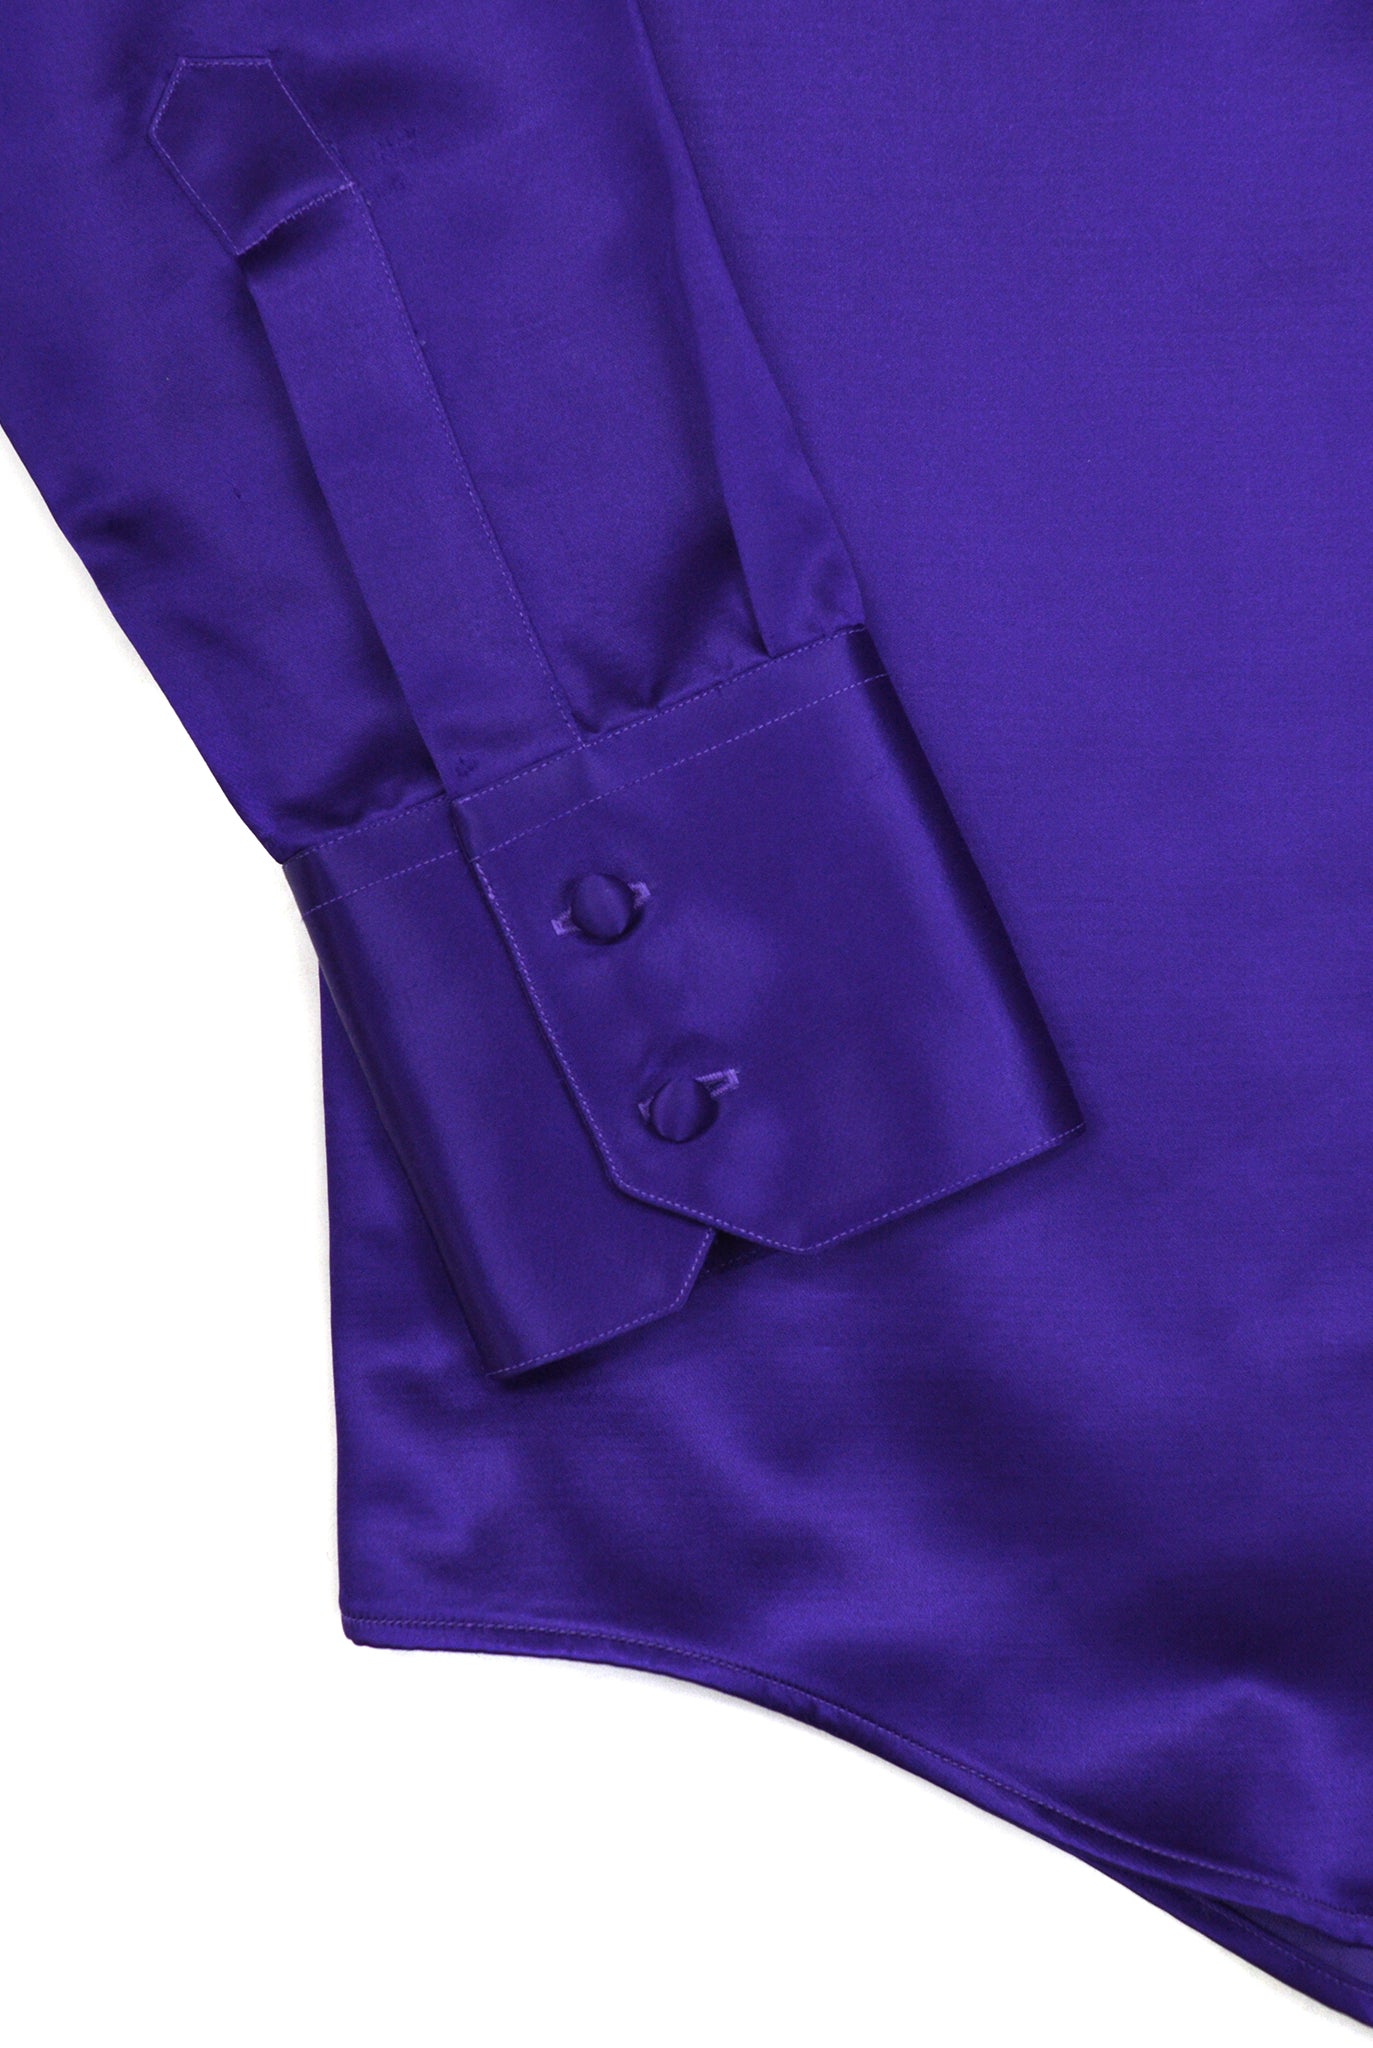 Ernest W. Baker Covered Button Shirt, Purple Satin